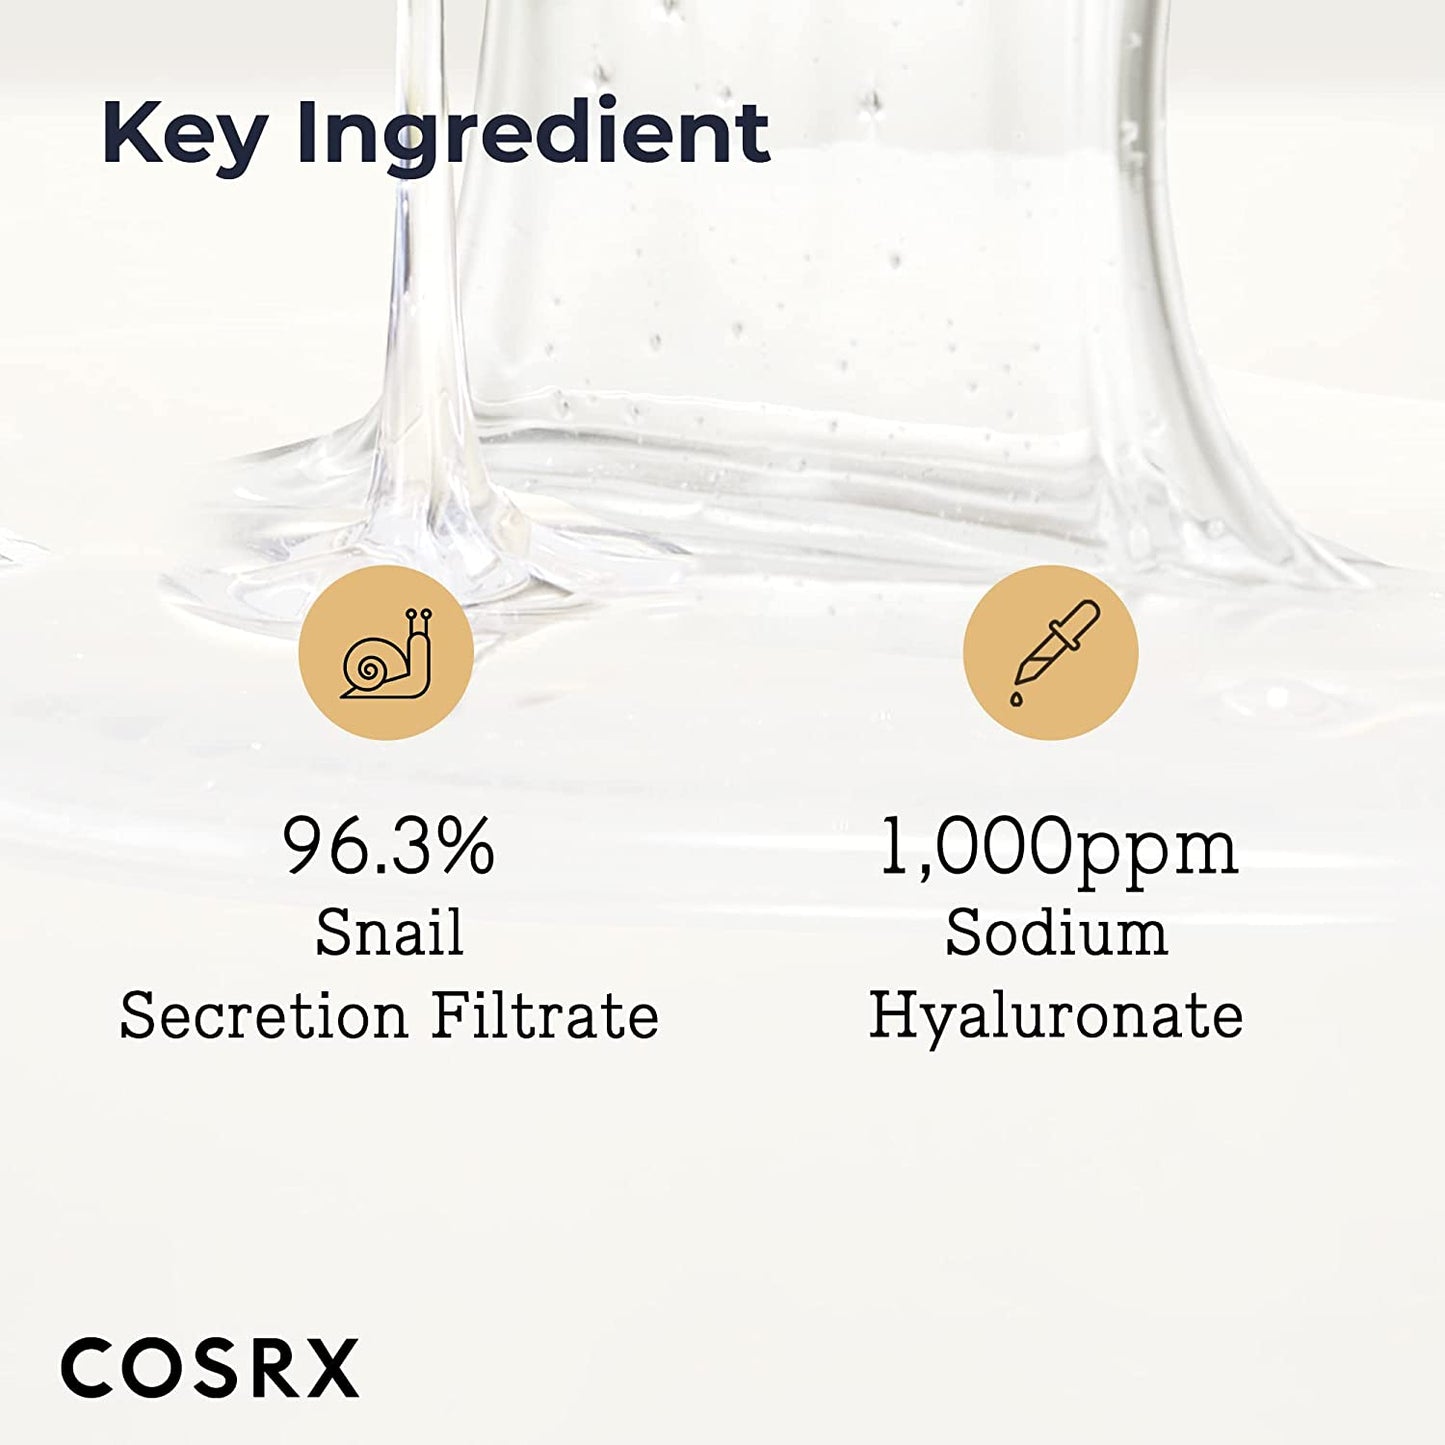 COSRX Snail Mucin 96% Power Repairing Essence 3.38 fl.oz, 100ml